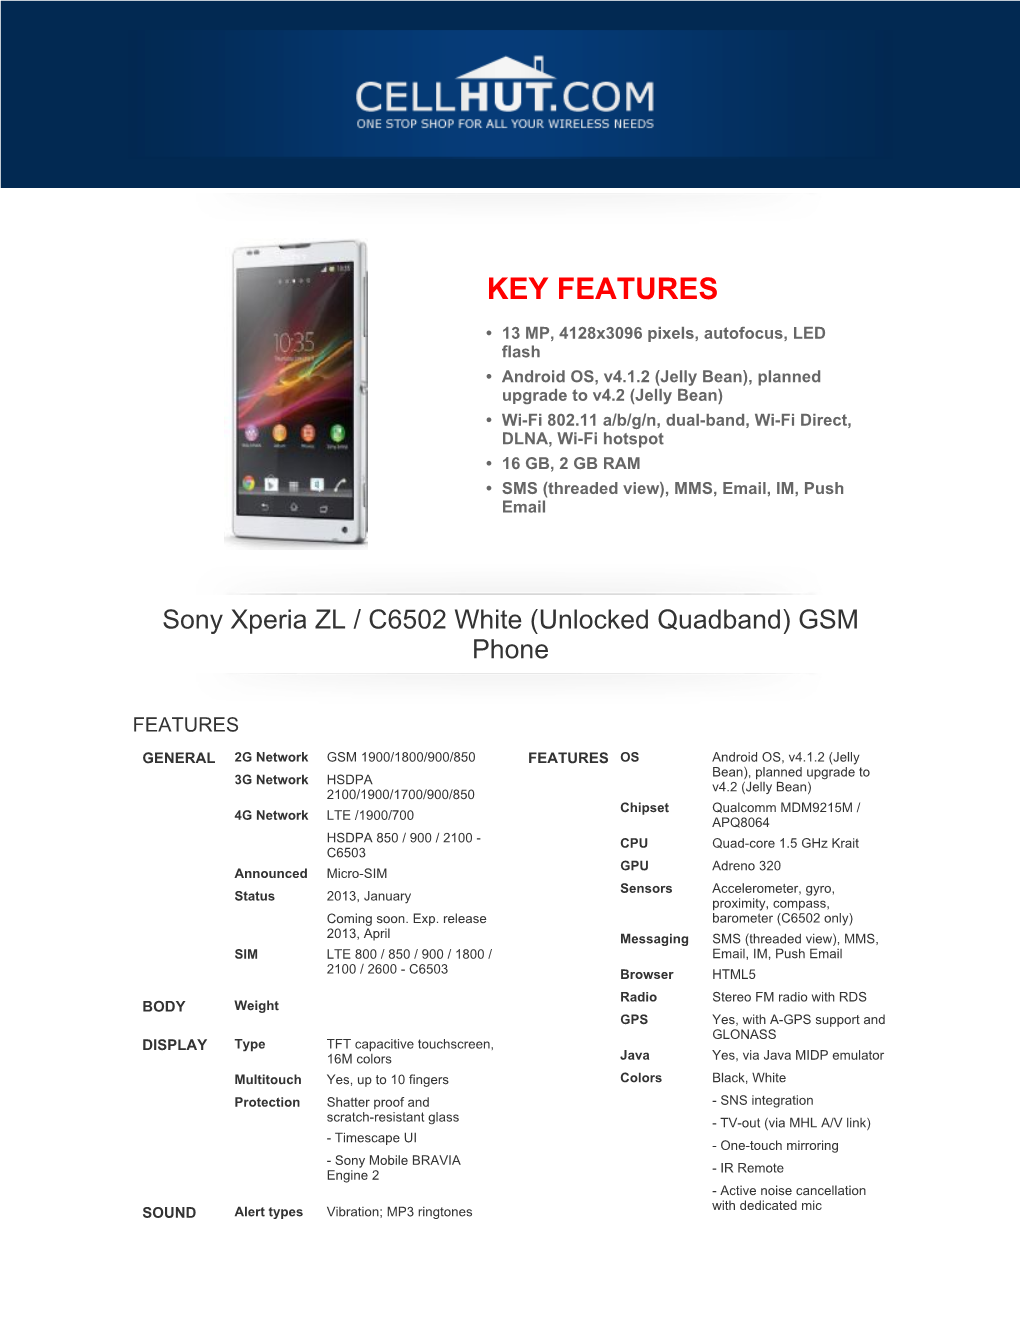 Sony Xperia ZL / C6502 White (Unlocked Quadband) GSM Phone